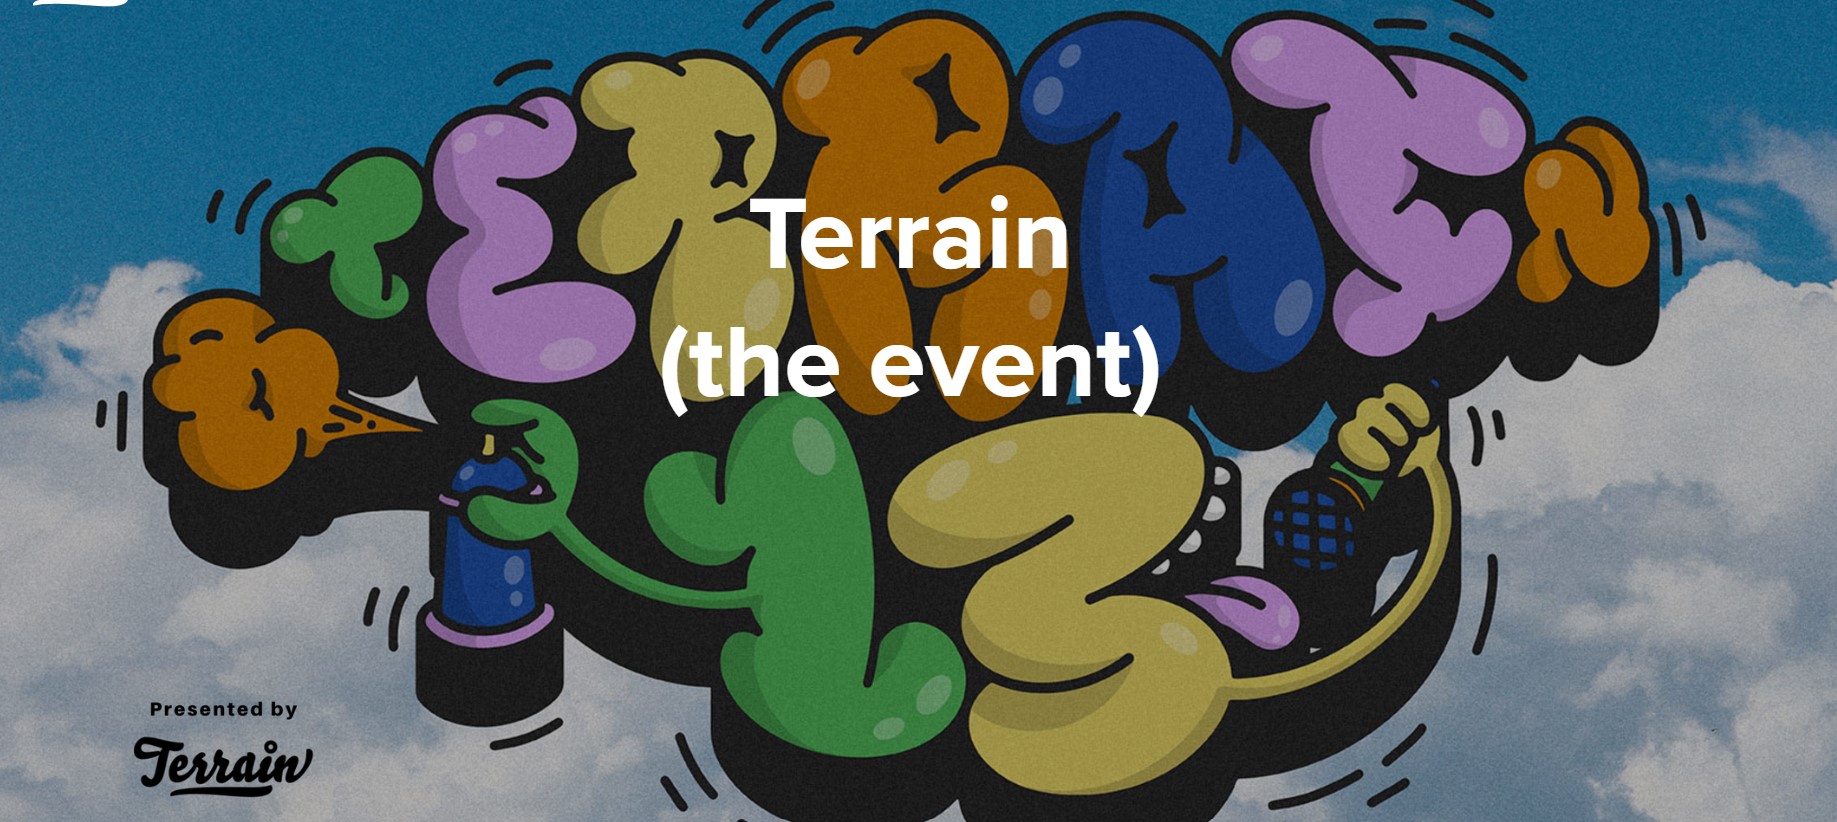 Terrain - The Event!